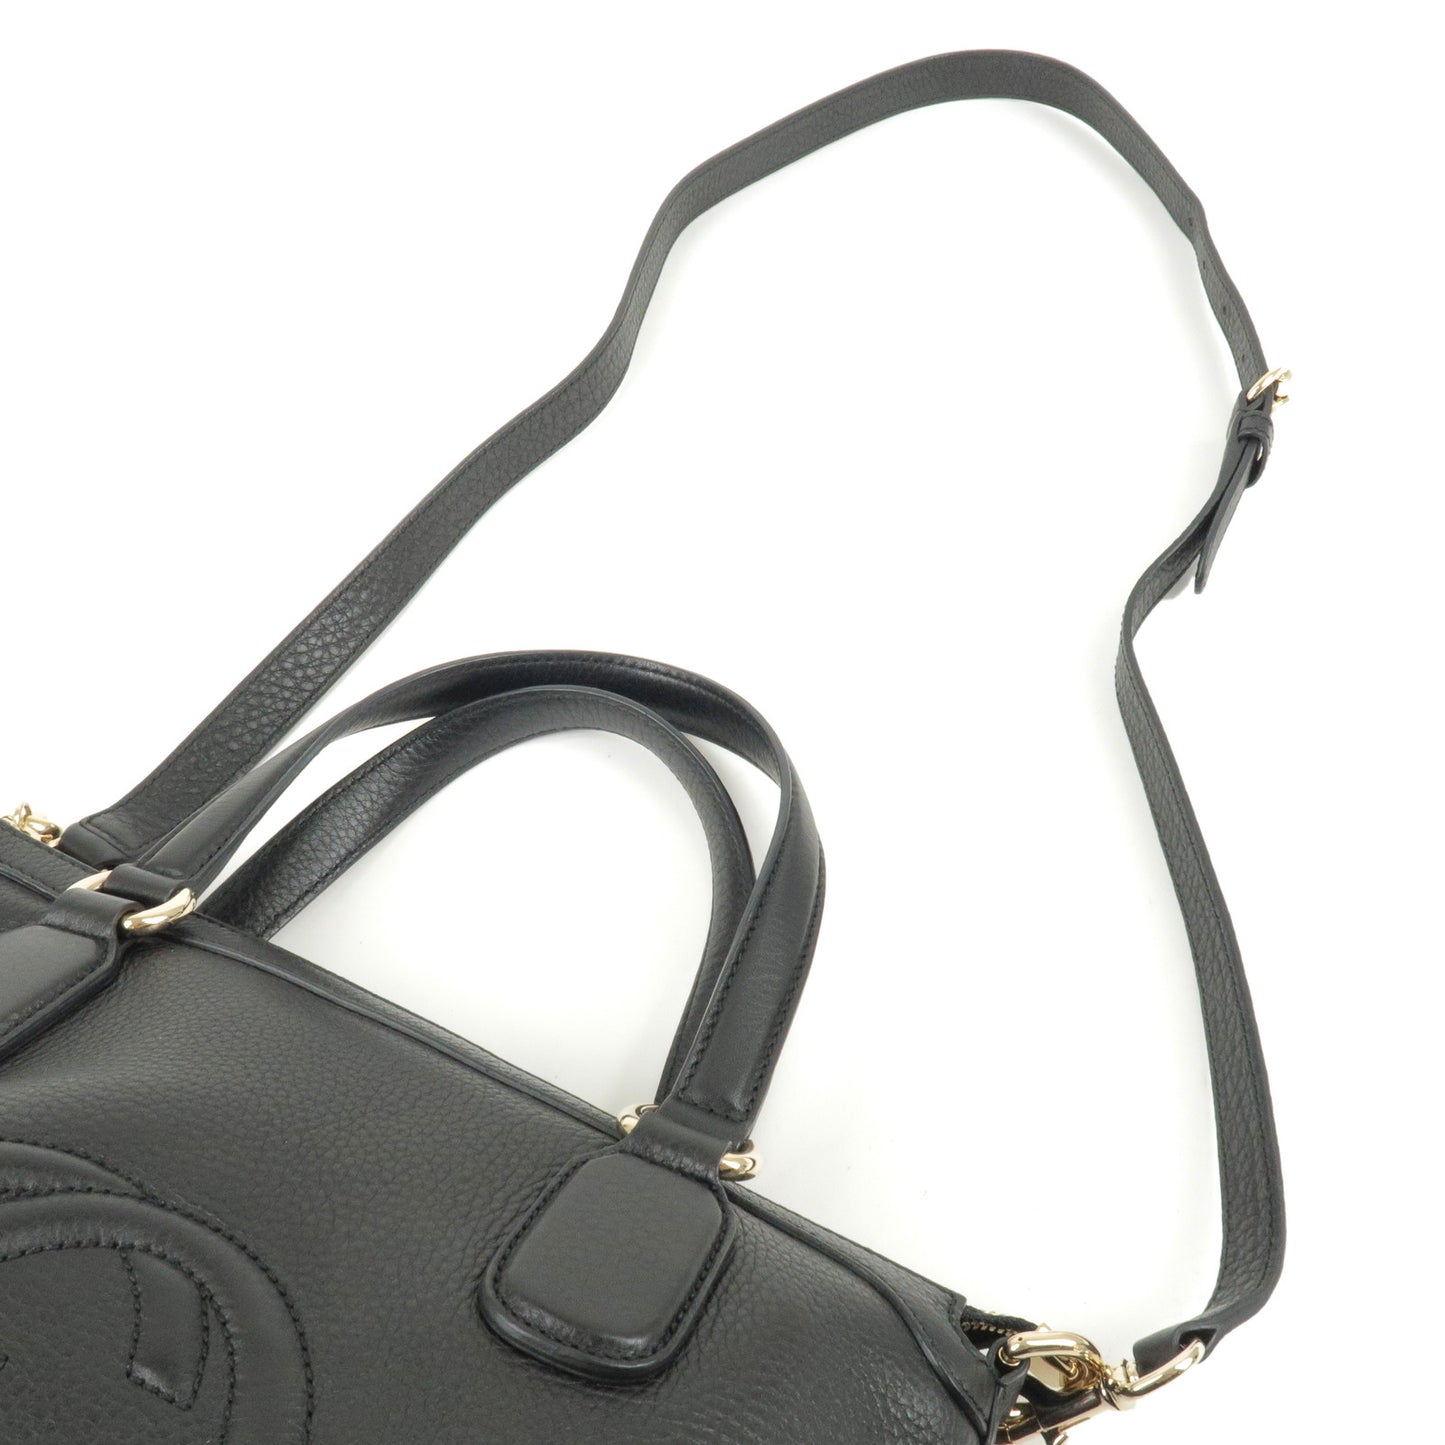 GUCCI SOHO Interlocking G Leather 2Way Bag Hand Bag Black 308362